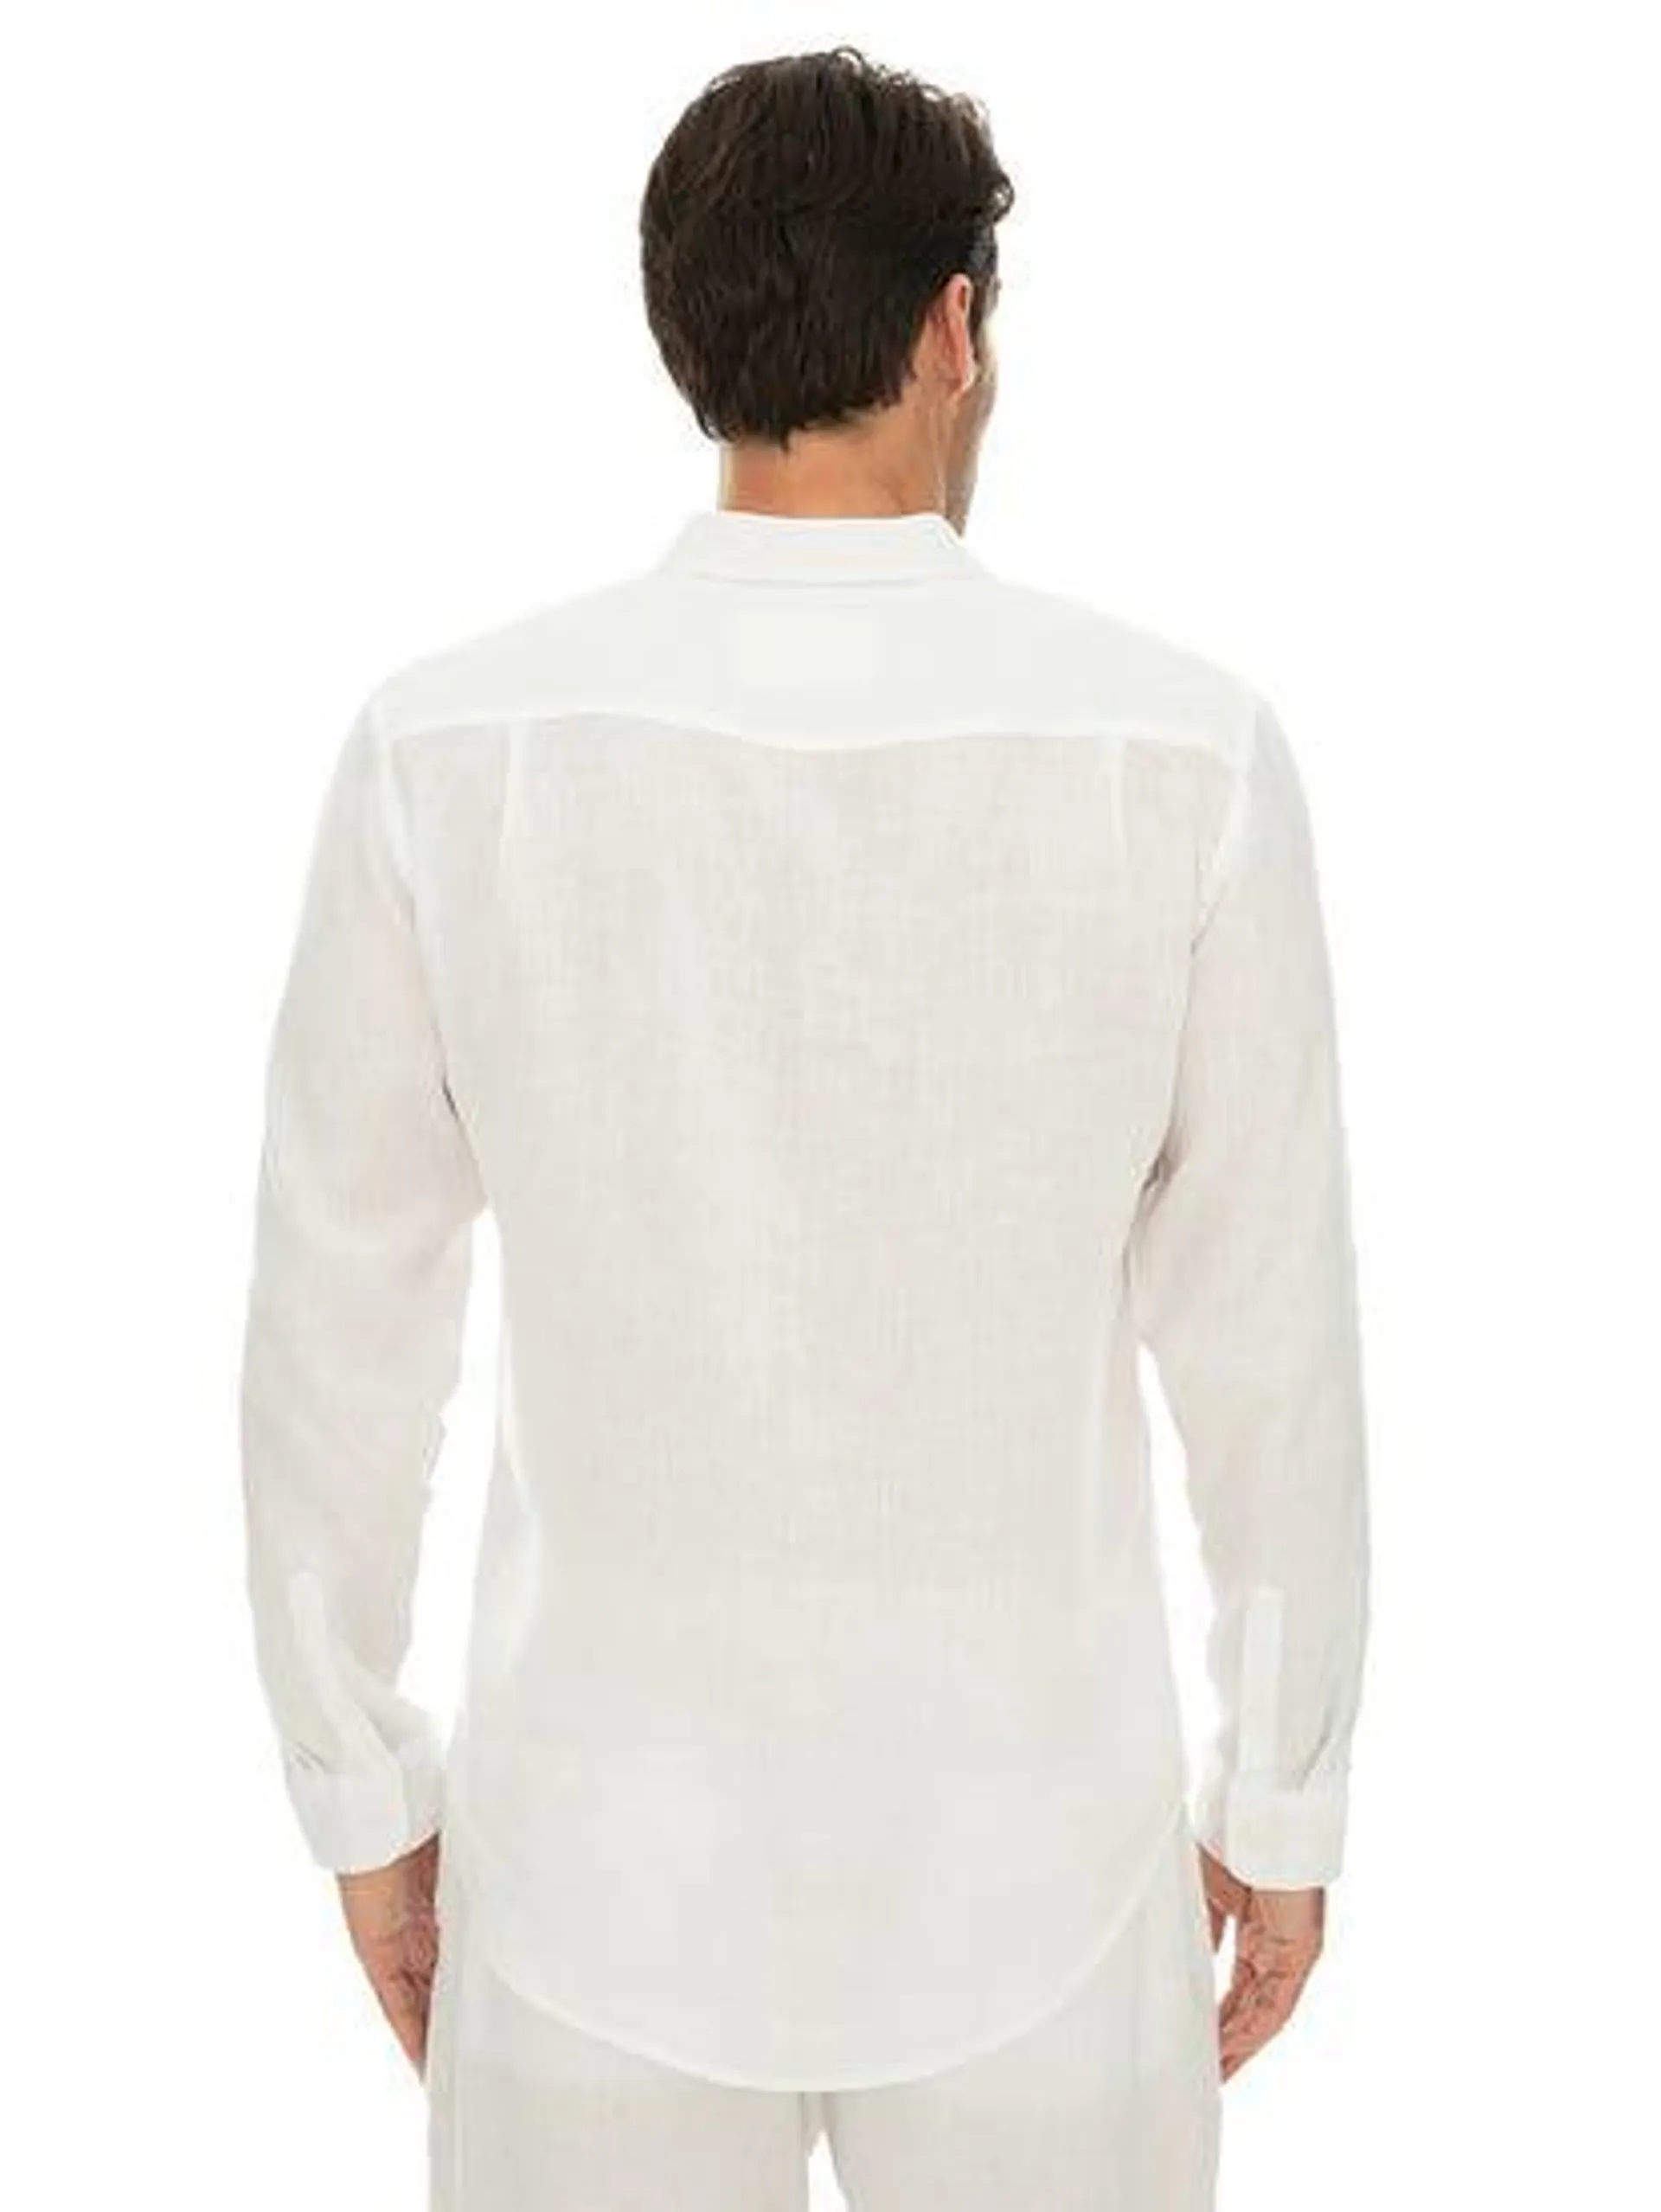 Riley Adams White Linen Shirt